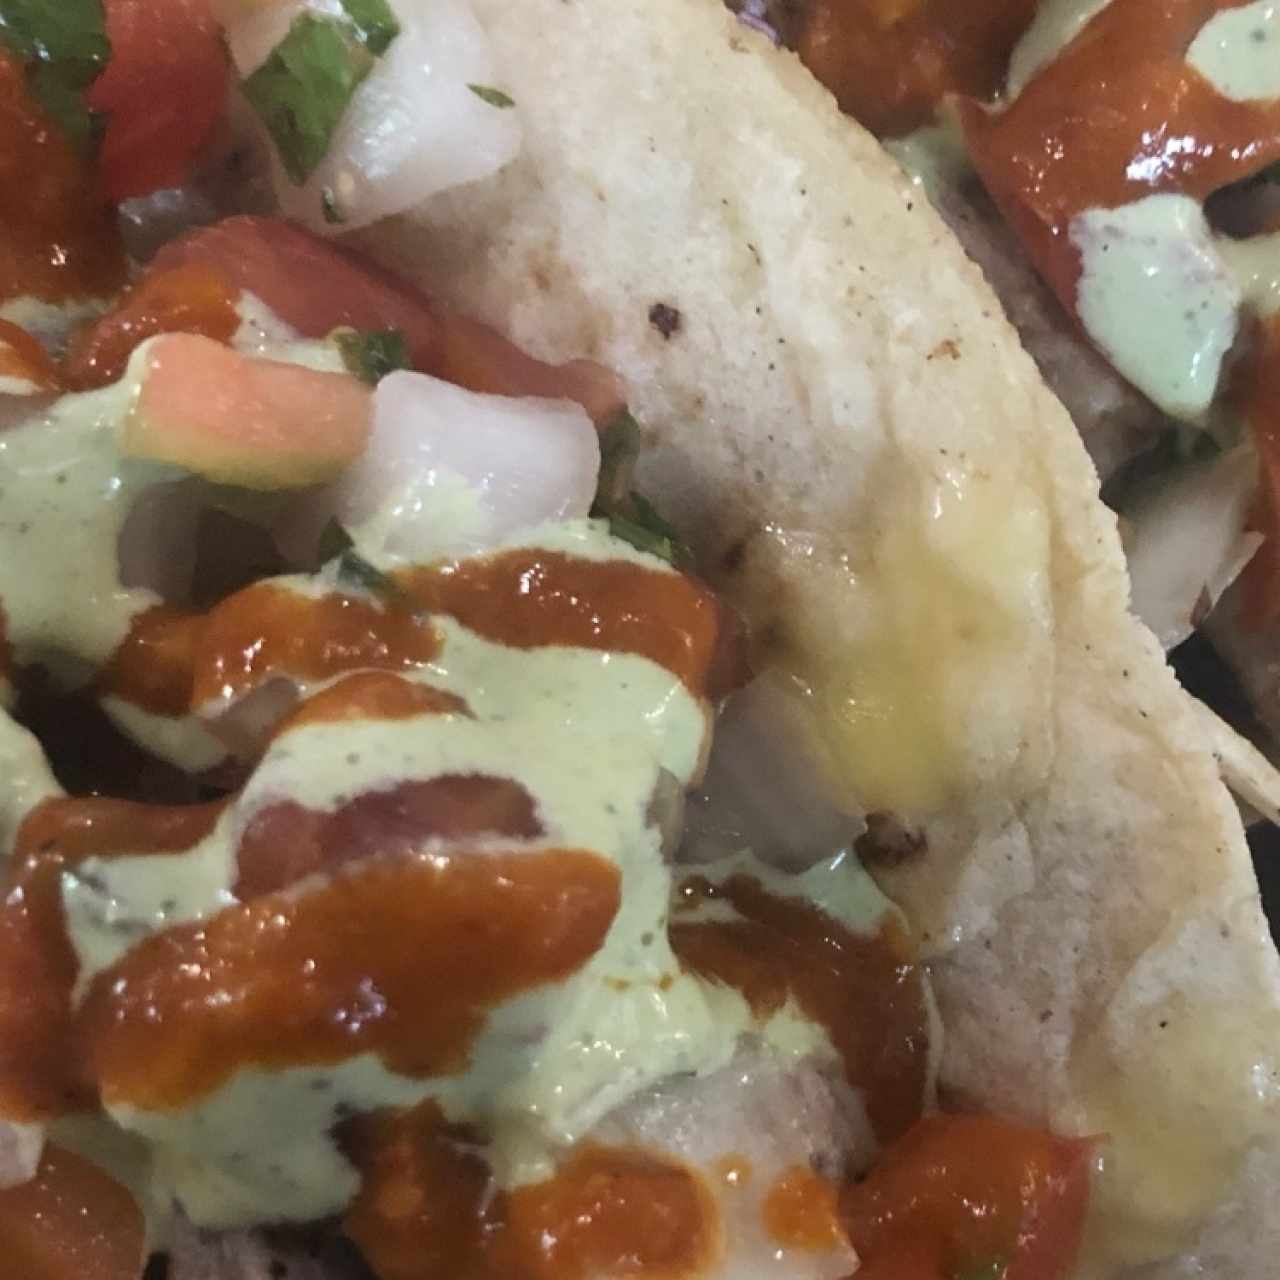 Tacos de Pescado “Fish Tacos”